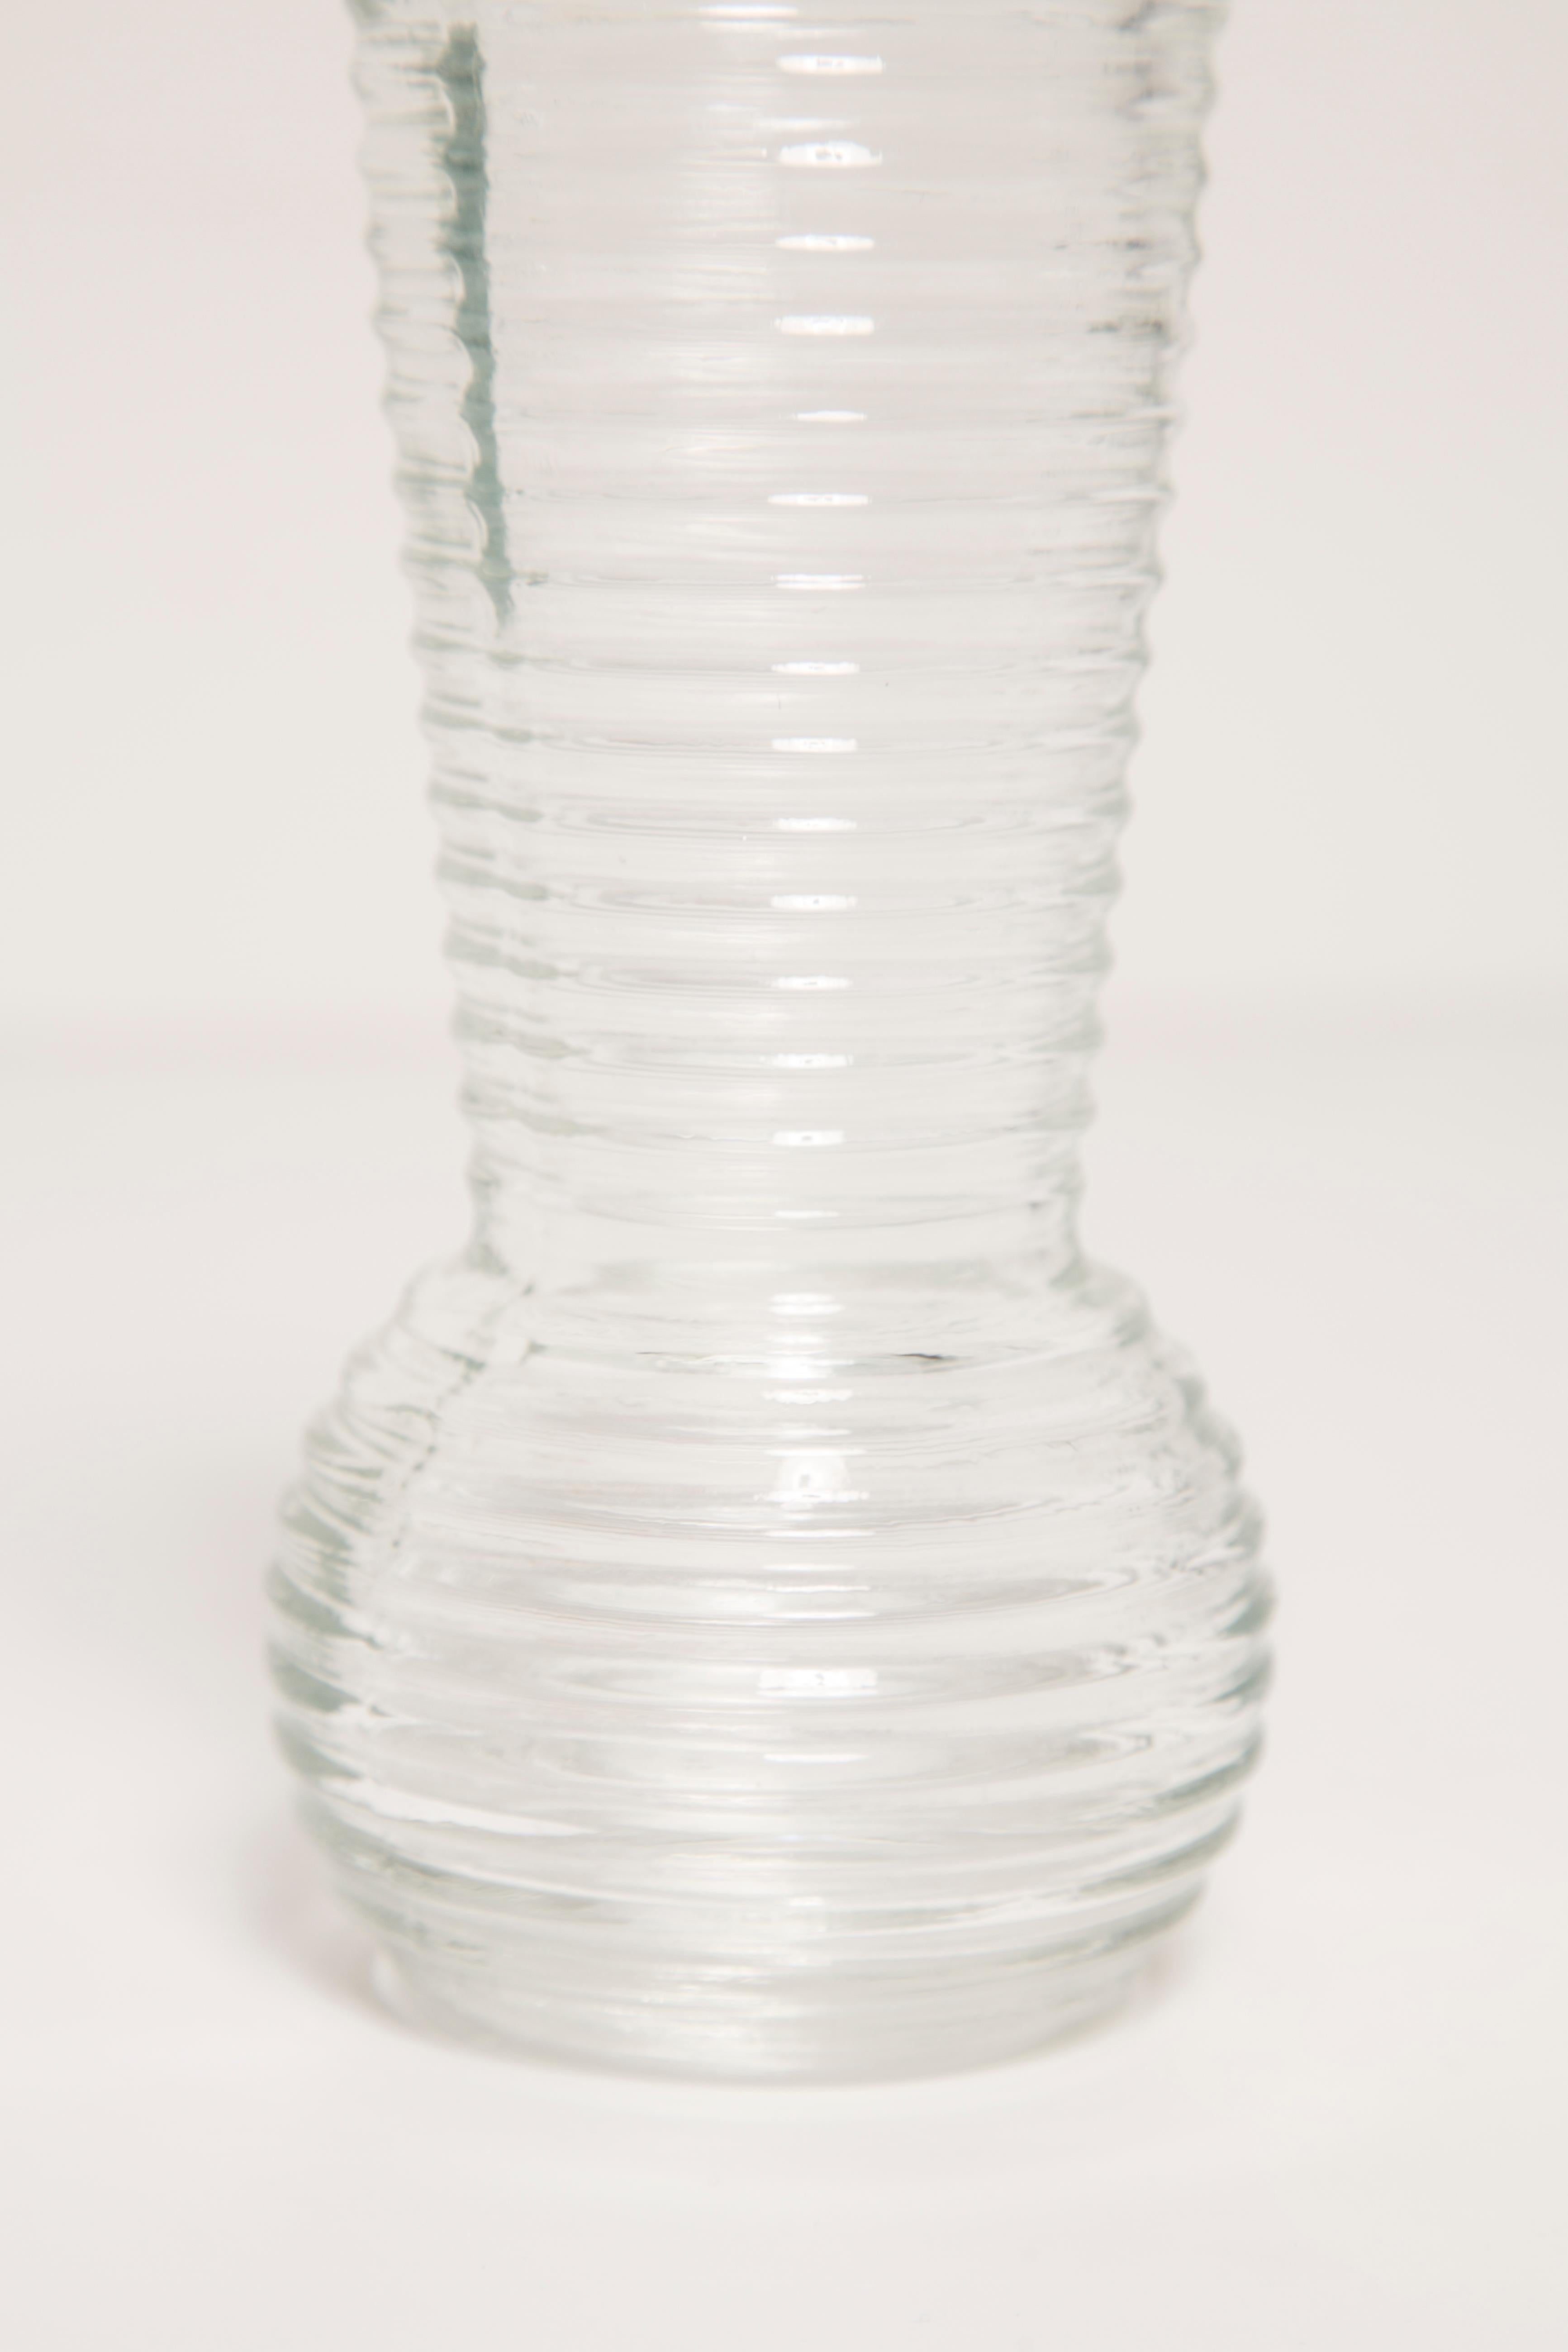 Midcentury Vintage Transparent Small Vase, Europe, 1960s For Sale 2